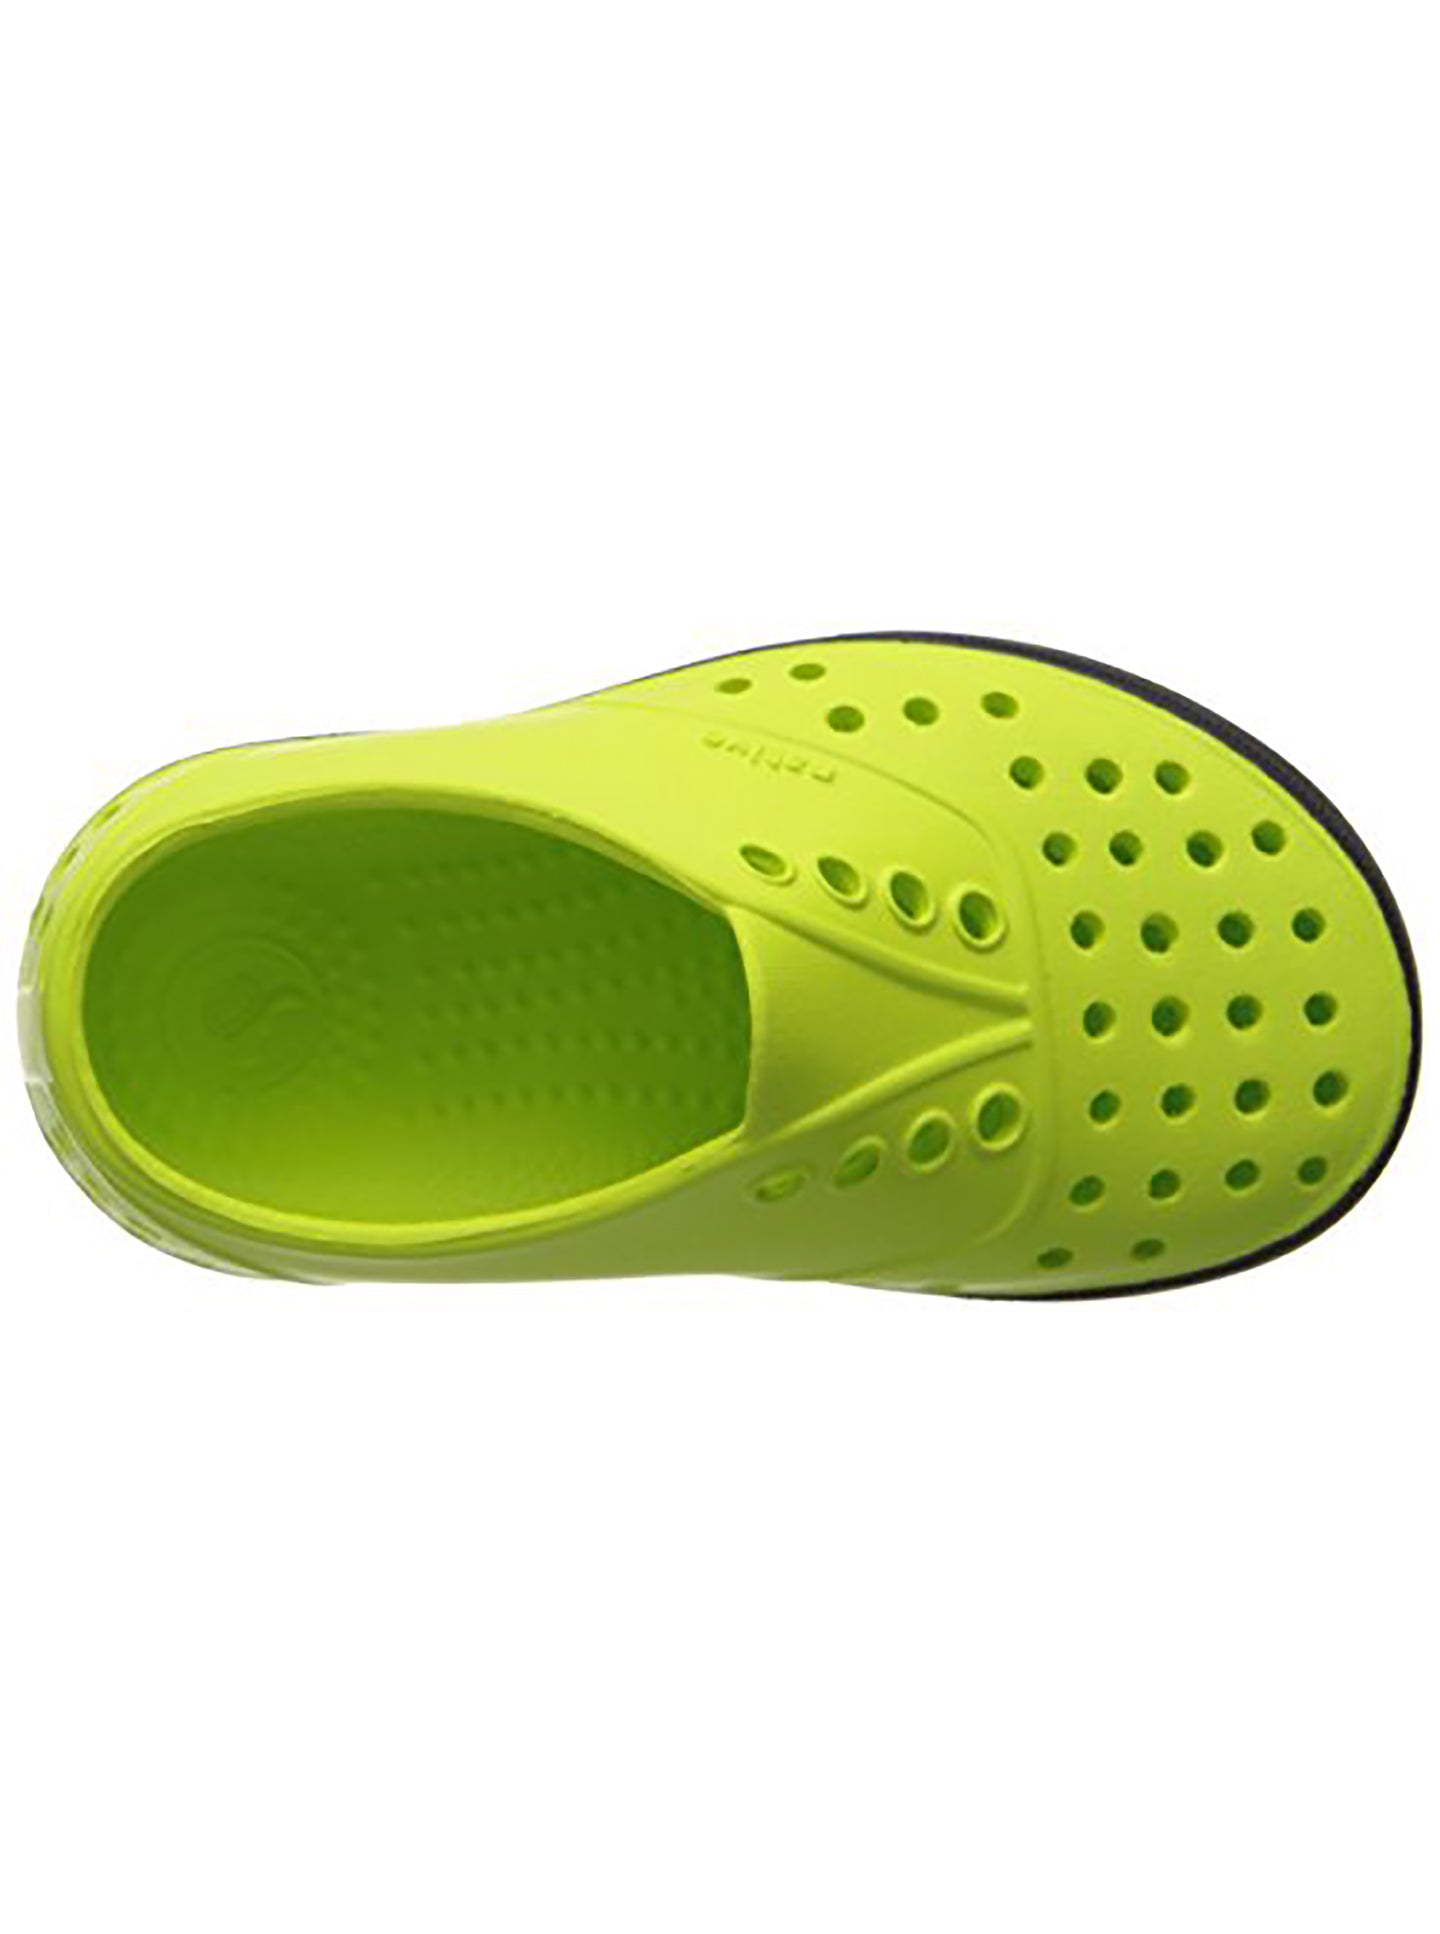 [US4] Native Kids' Miller Shoe - Chartreuse Green/Jiffy Black